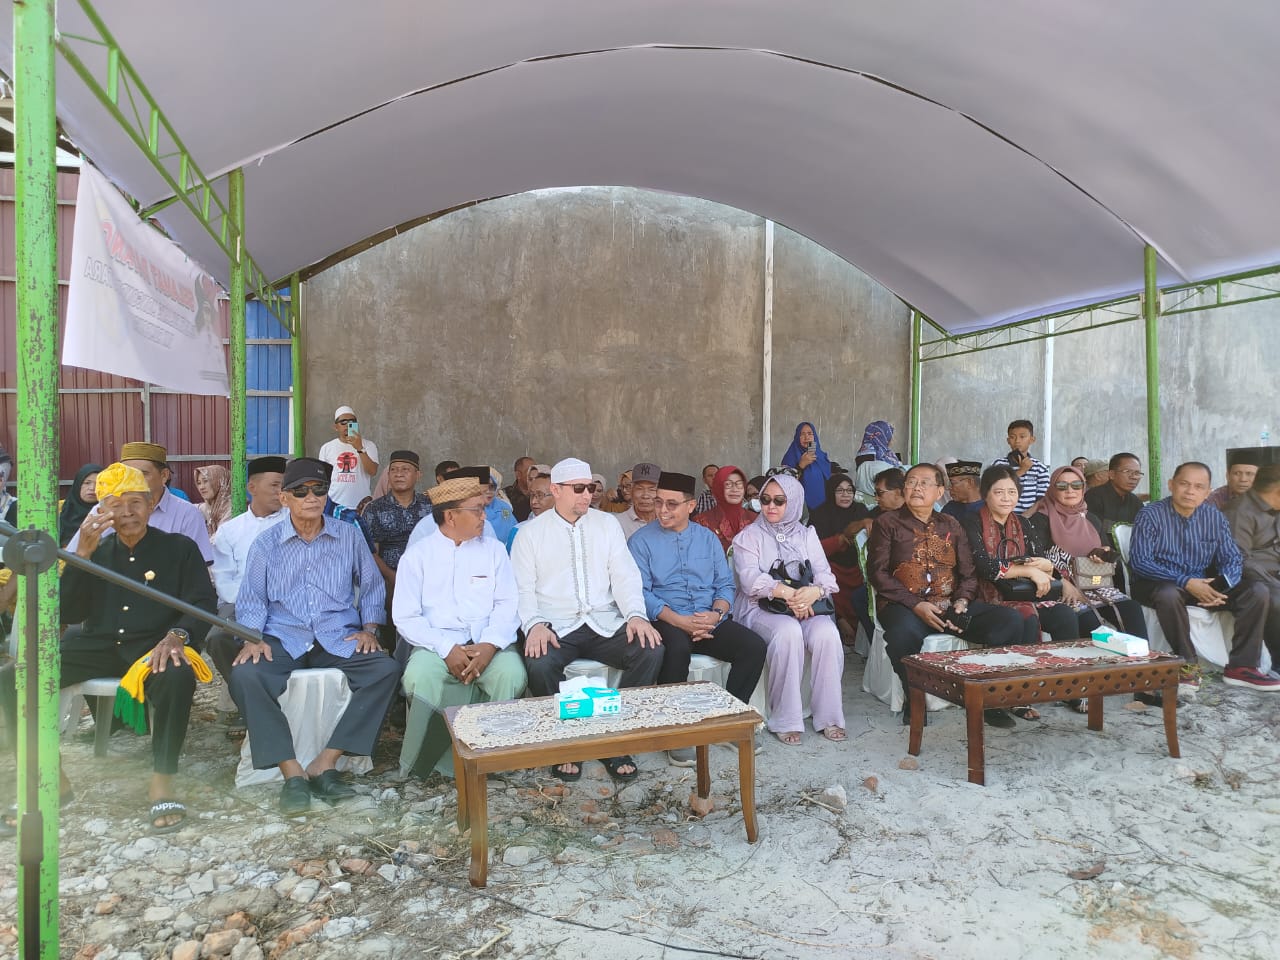 Prosesi Peletakan Batu Pertama Pembangunan Asrama Mahasiswa Bolmut di Palu, Sulawesi Tengah